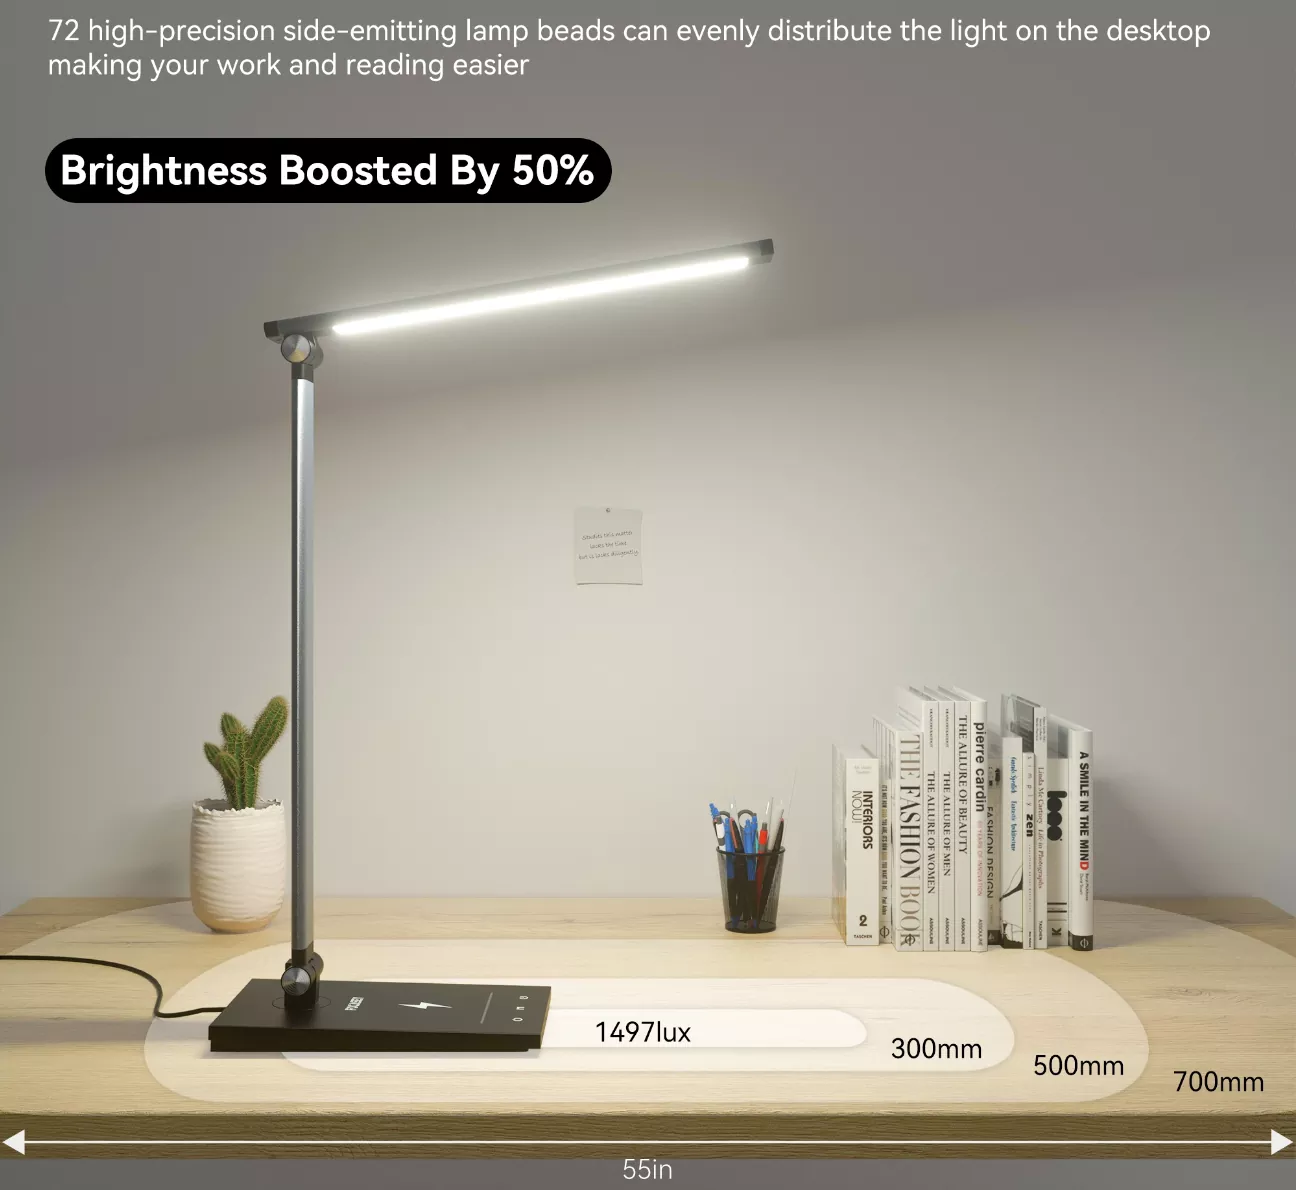 Smart LED Desk Lamp Infographic